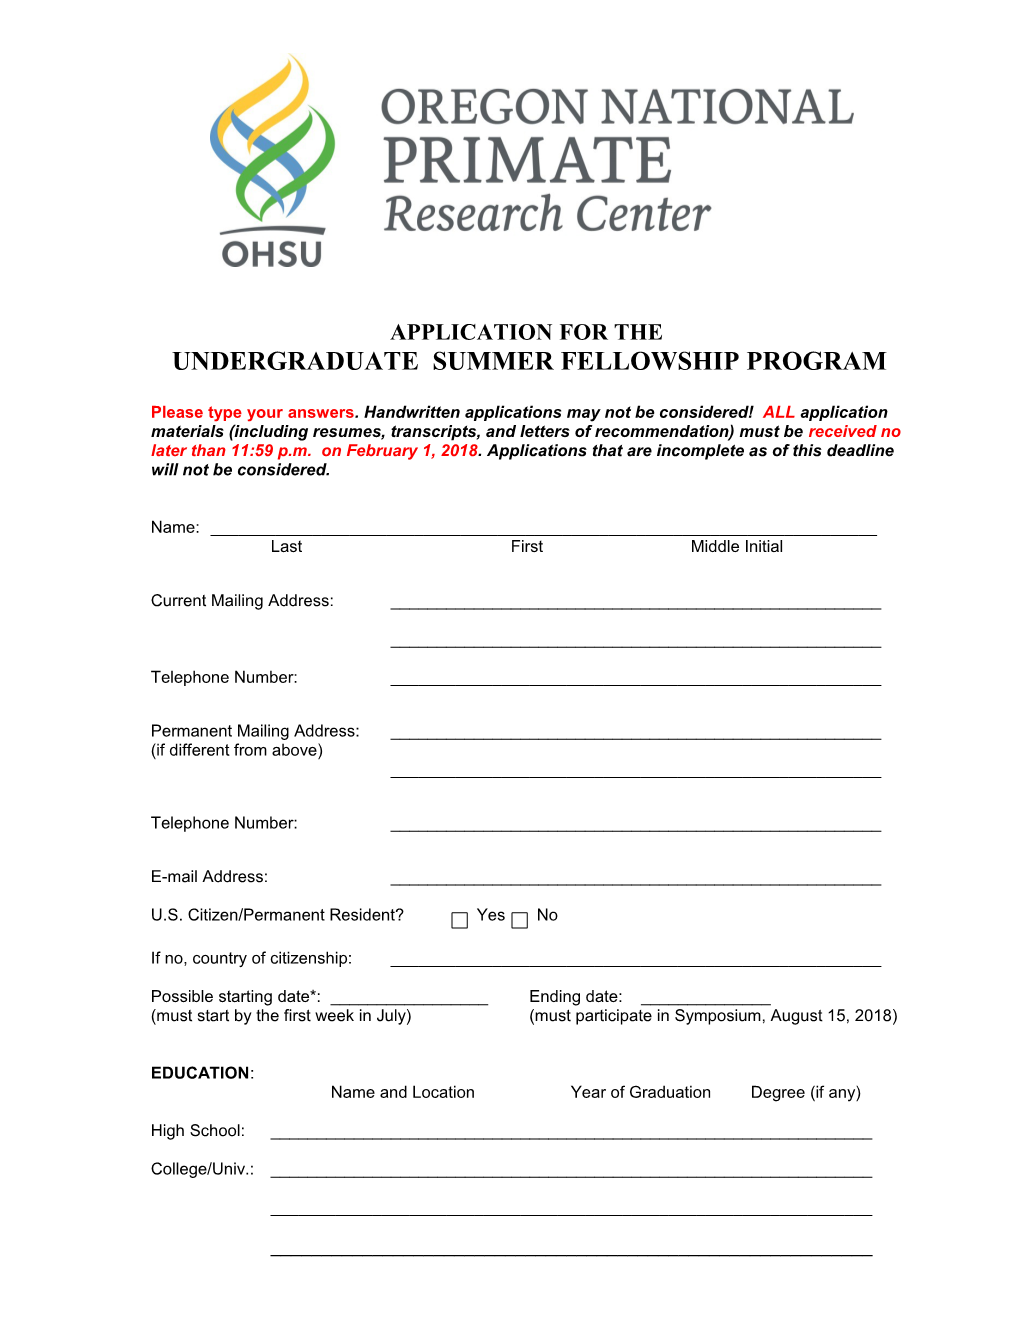 Undergraduate Summer Fellowship Program